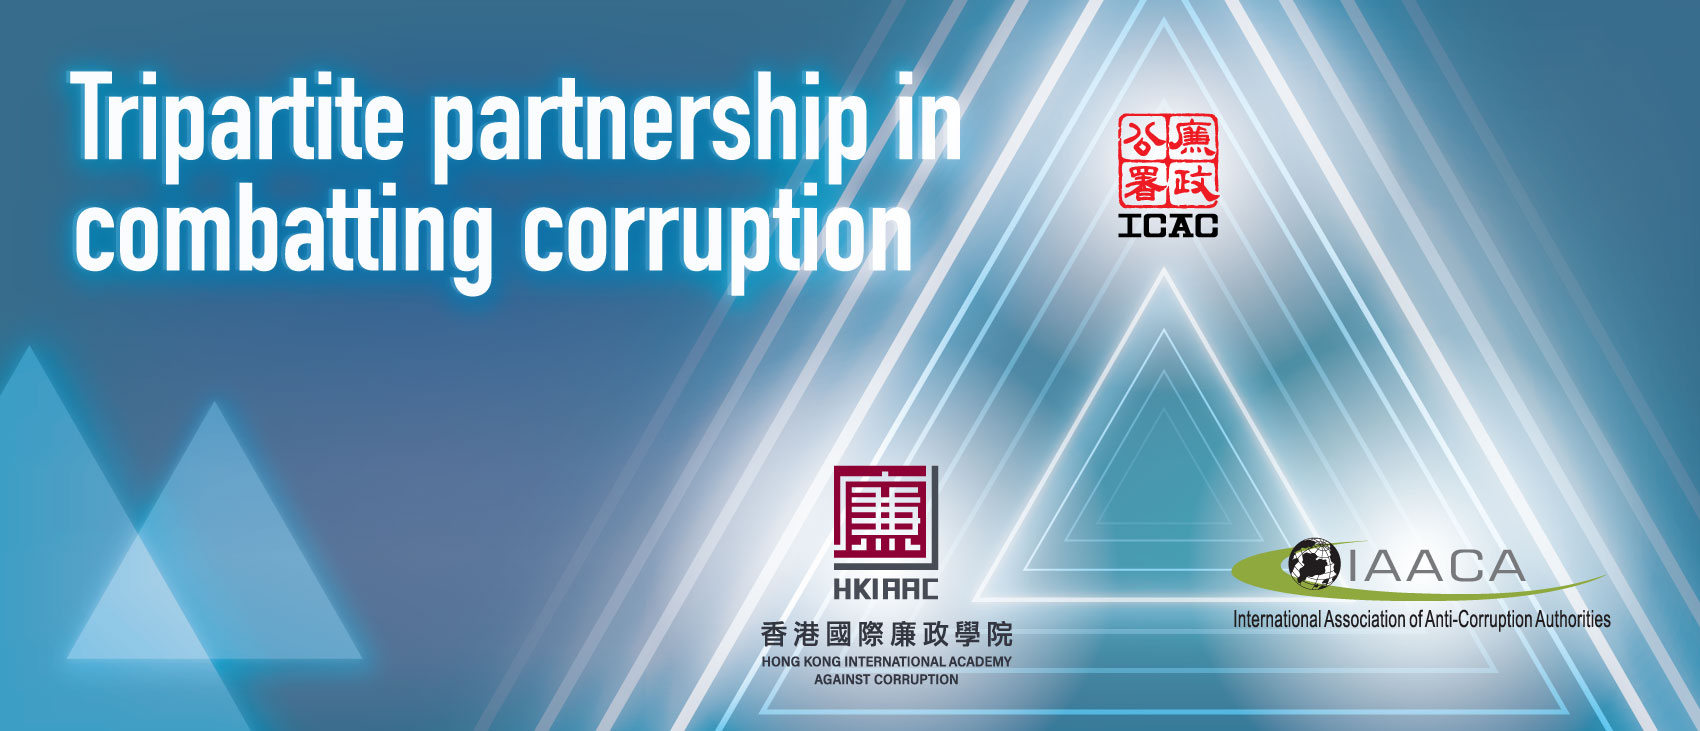 Tripartite Partnership in Combatting Corruption